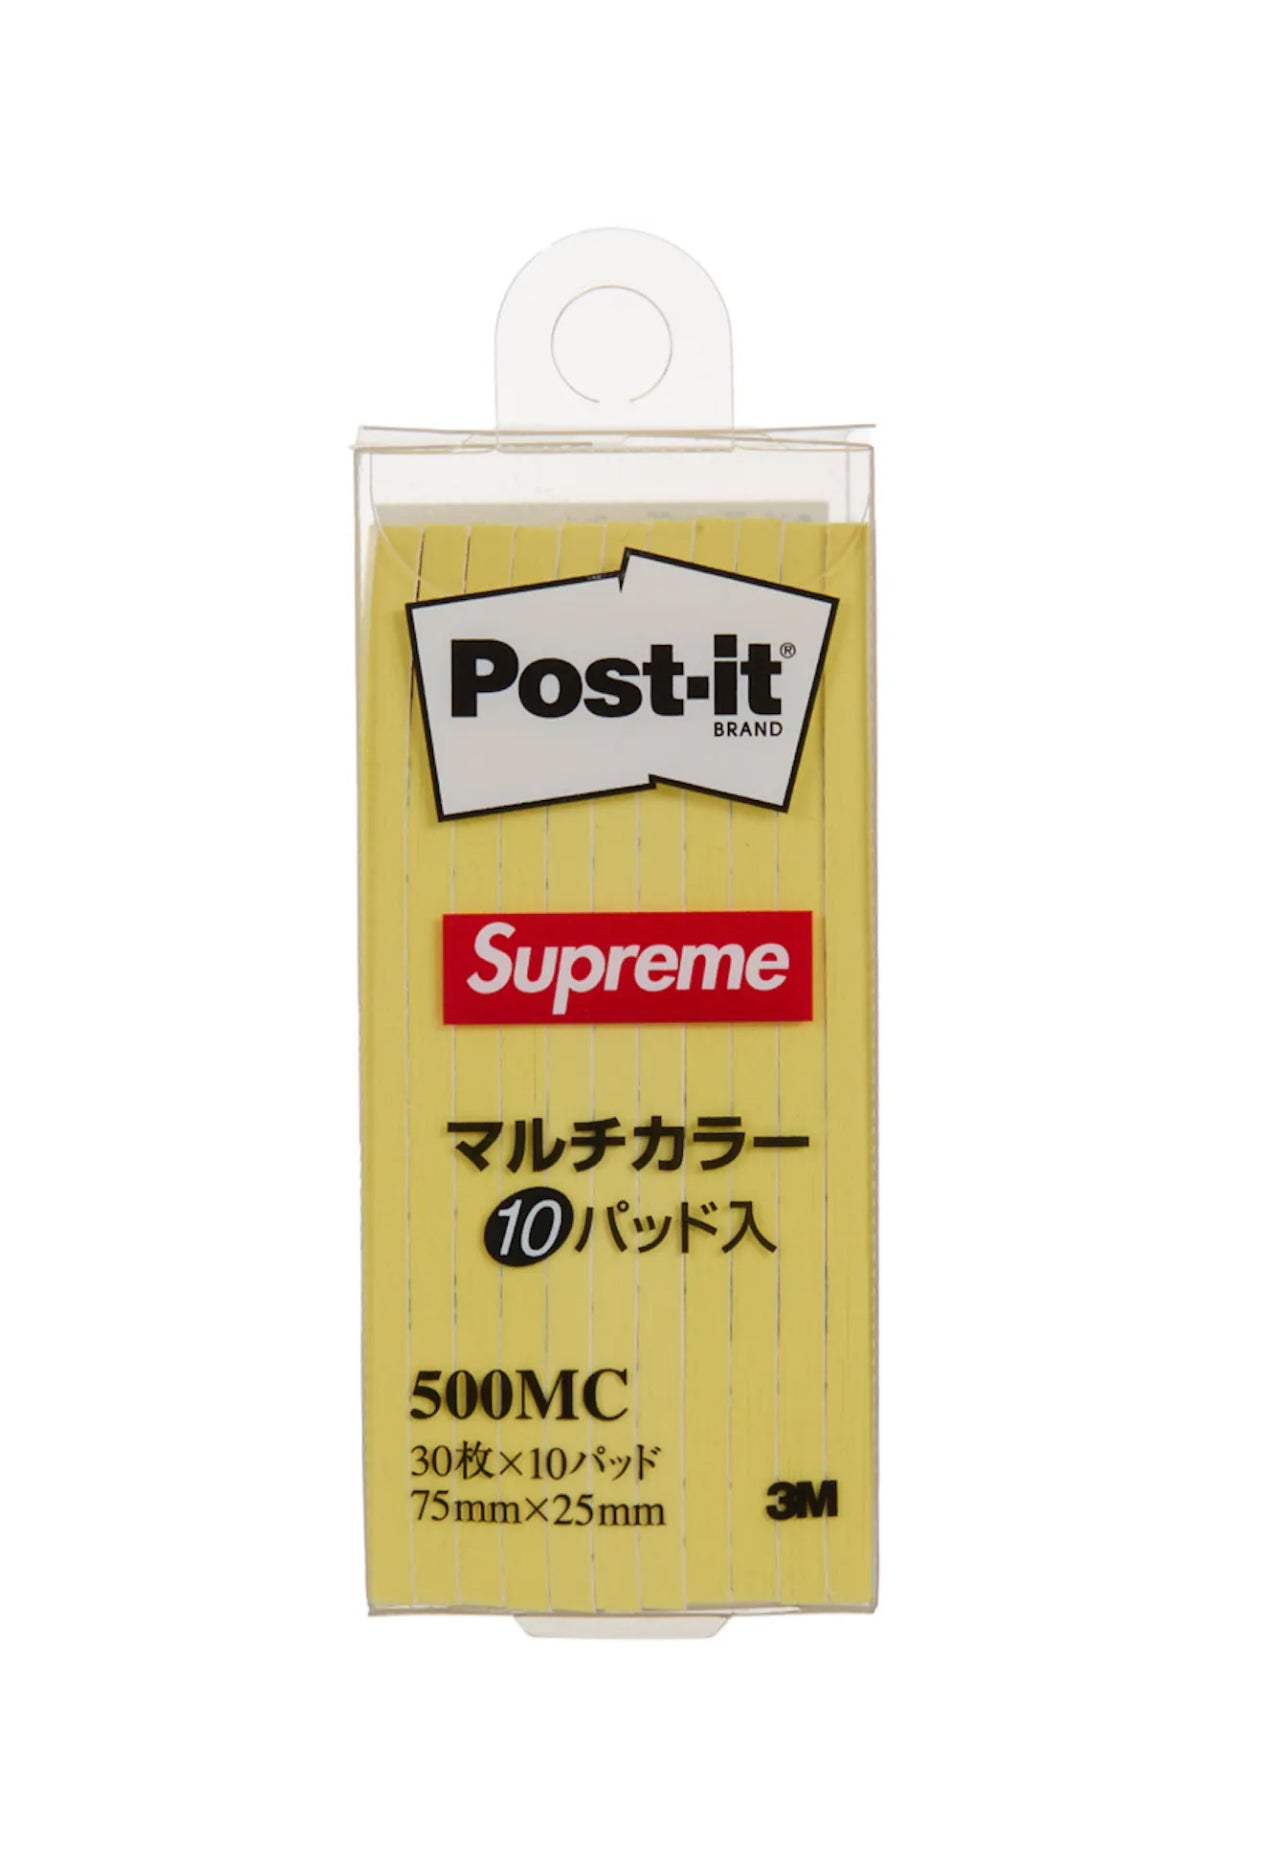 Supreme Post-it (10 Pack)